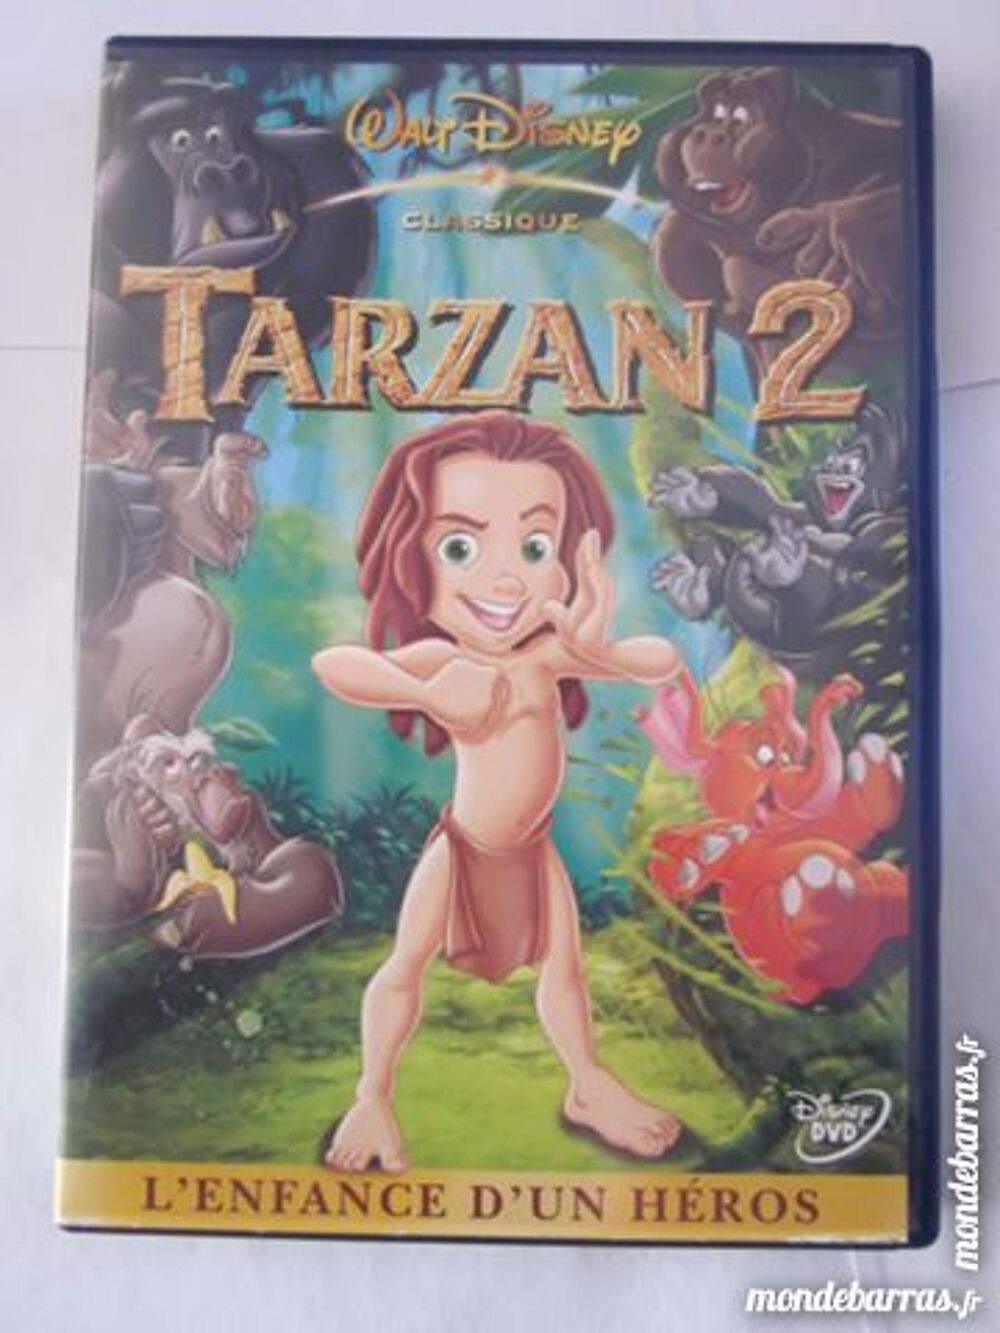 DVD DISNEY TARZAN 2 DVD et blu-ray